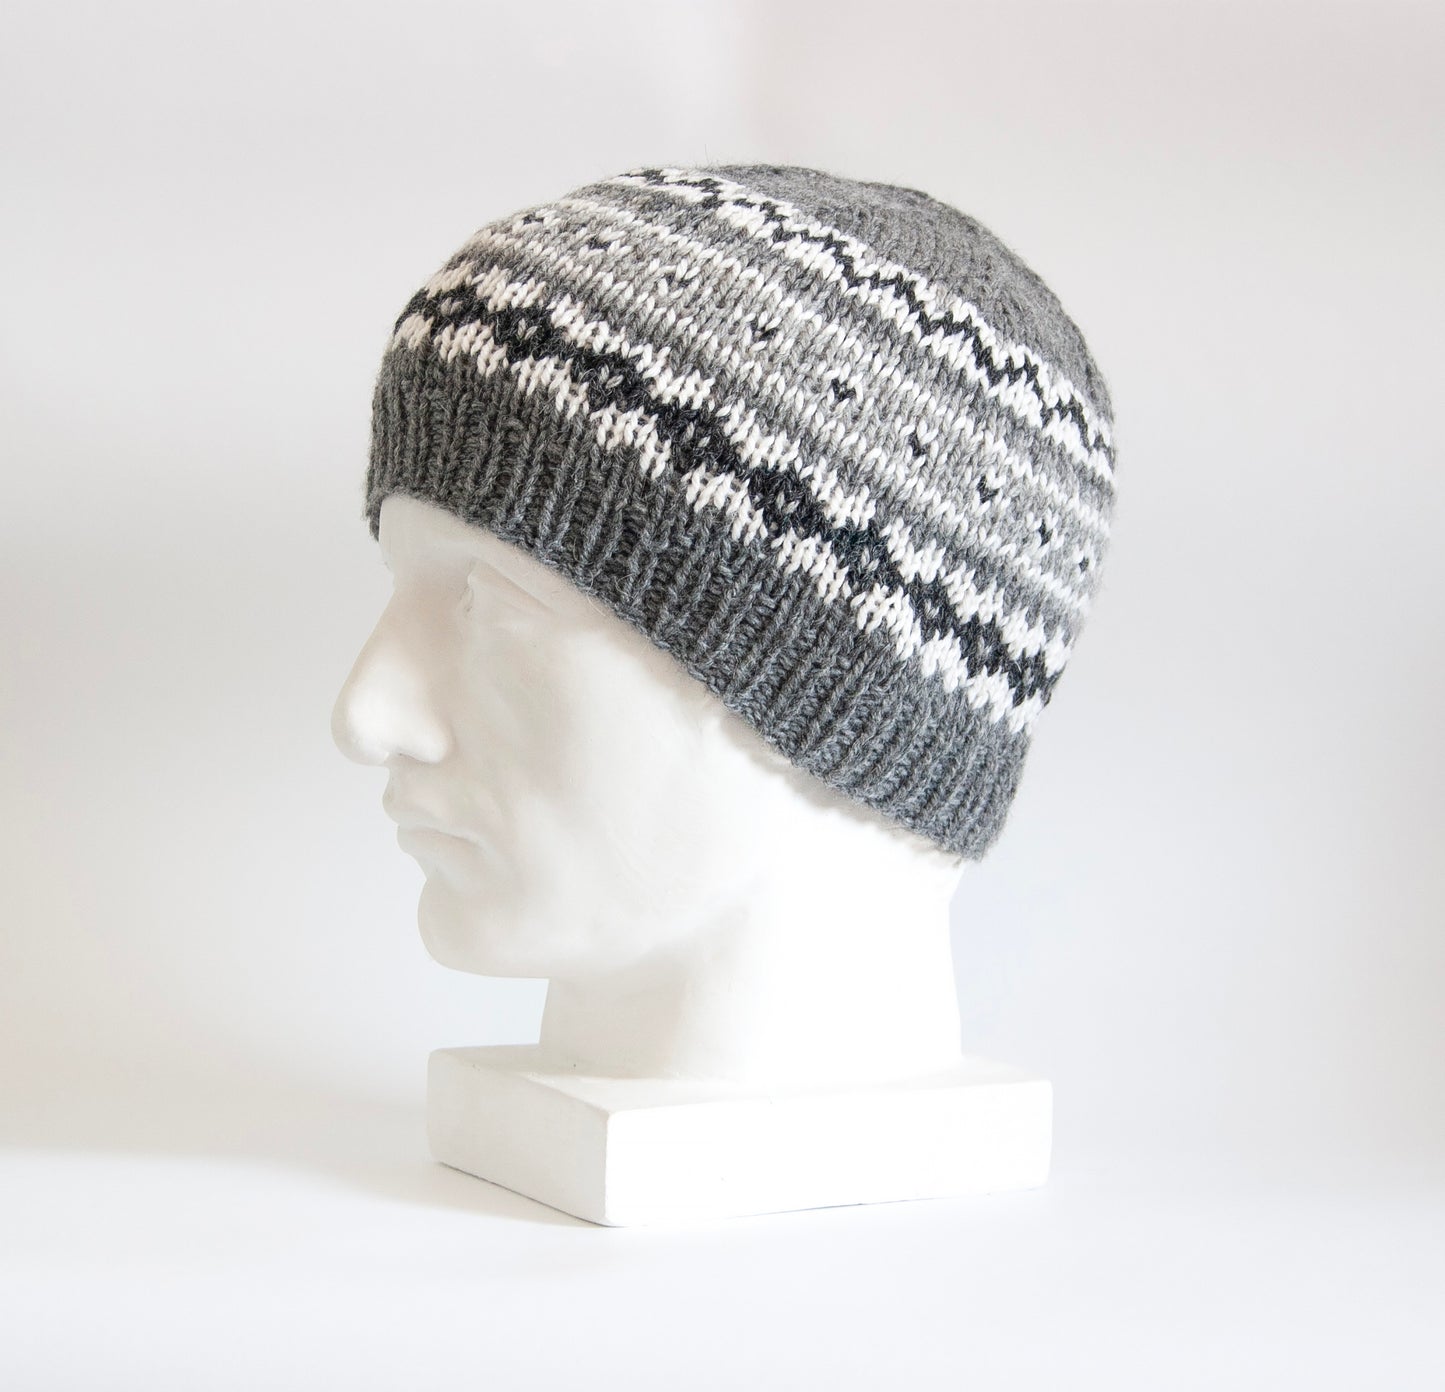 grey, white and black hand-knitted Fair isle beanie hat